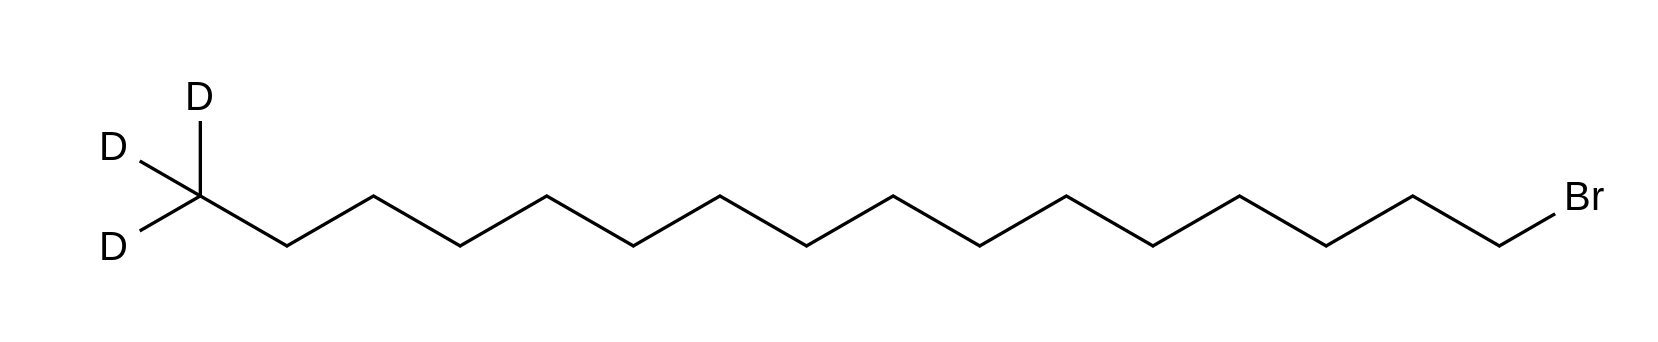 1-Bromohexadecane-16,16,16-d<sub>3</sub>